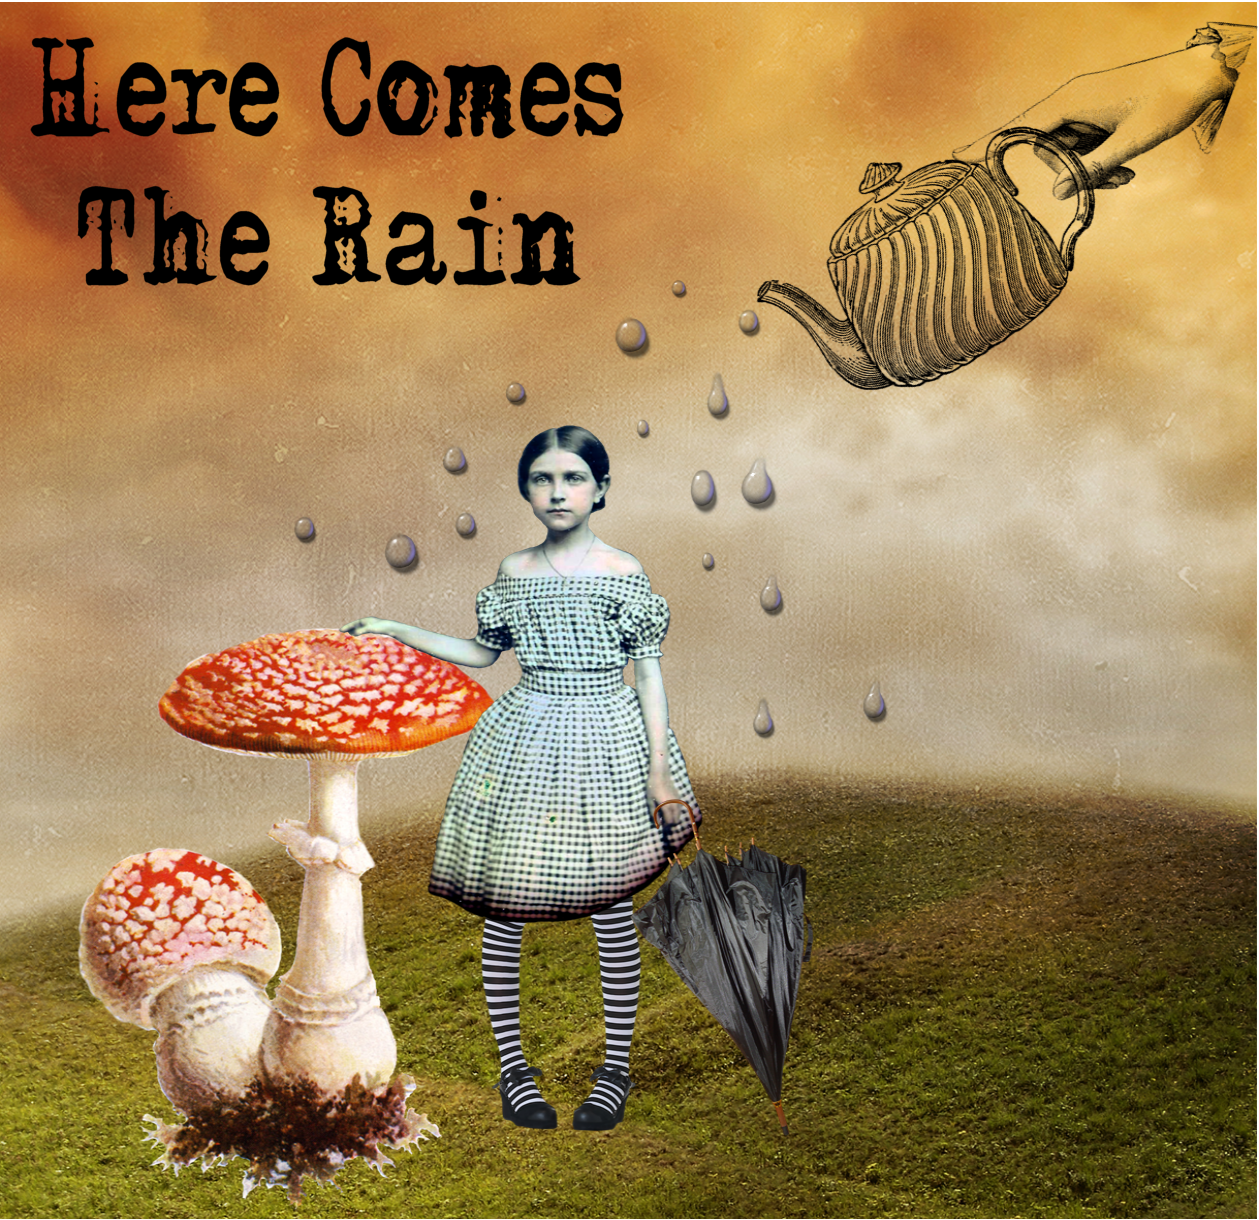 He comes the rain. Here comes the Rain. Here comes the Rain again. Грибы коллаж арт. Come here.